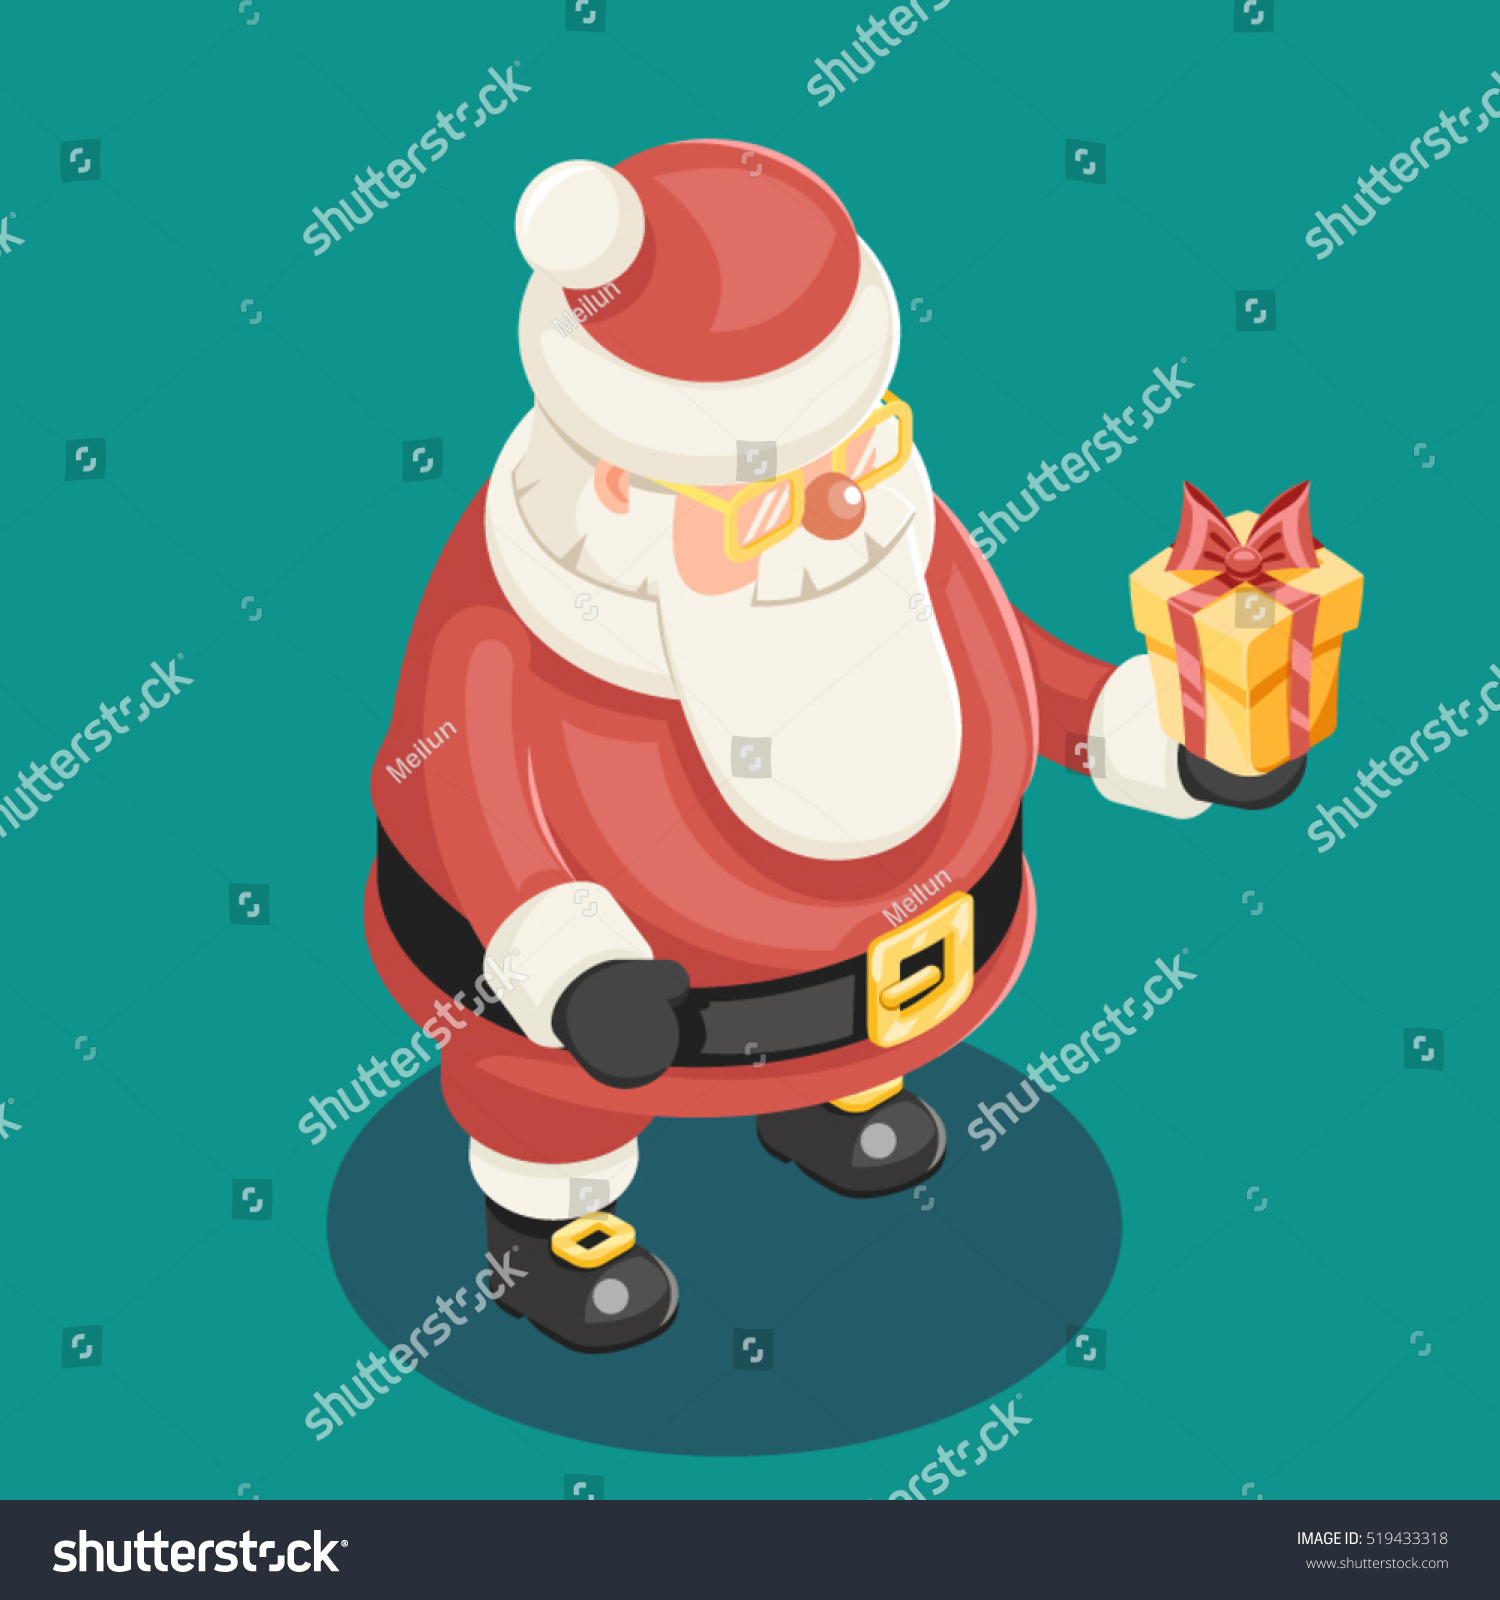 Download Cute Isometric 3d Christmas Santa Claus Stock Vector ...